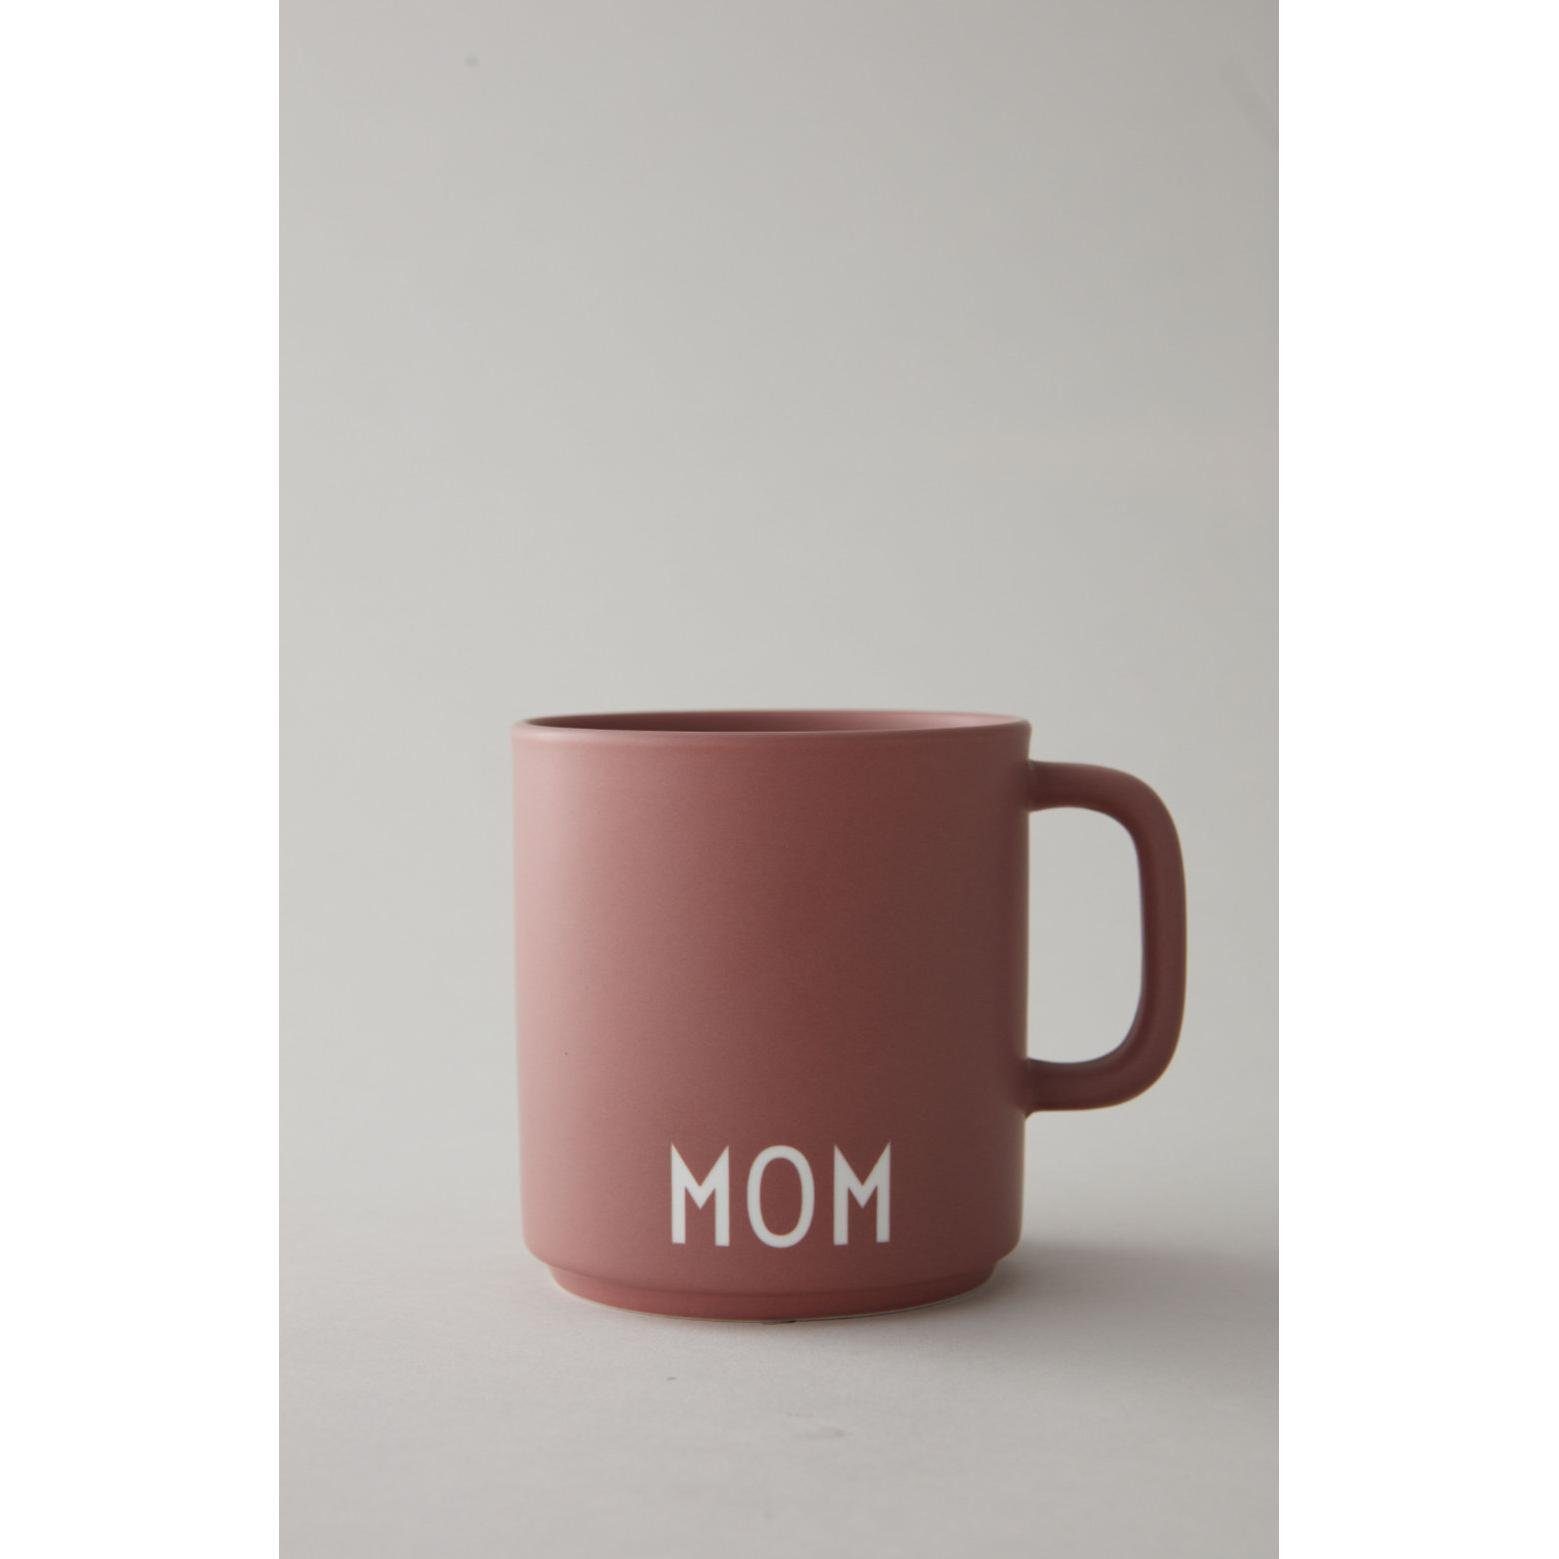 Cup Altrosa Design Mom Henkel Tasse Becher Favourite mit Letters